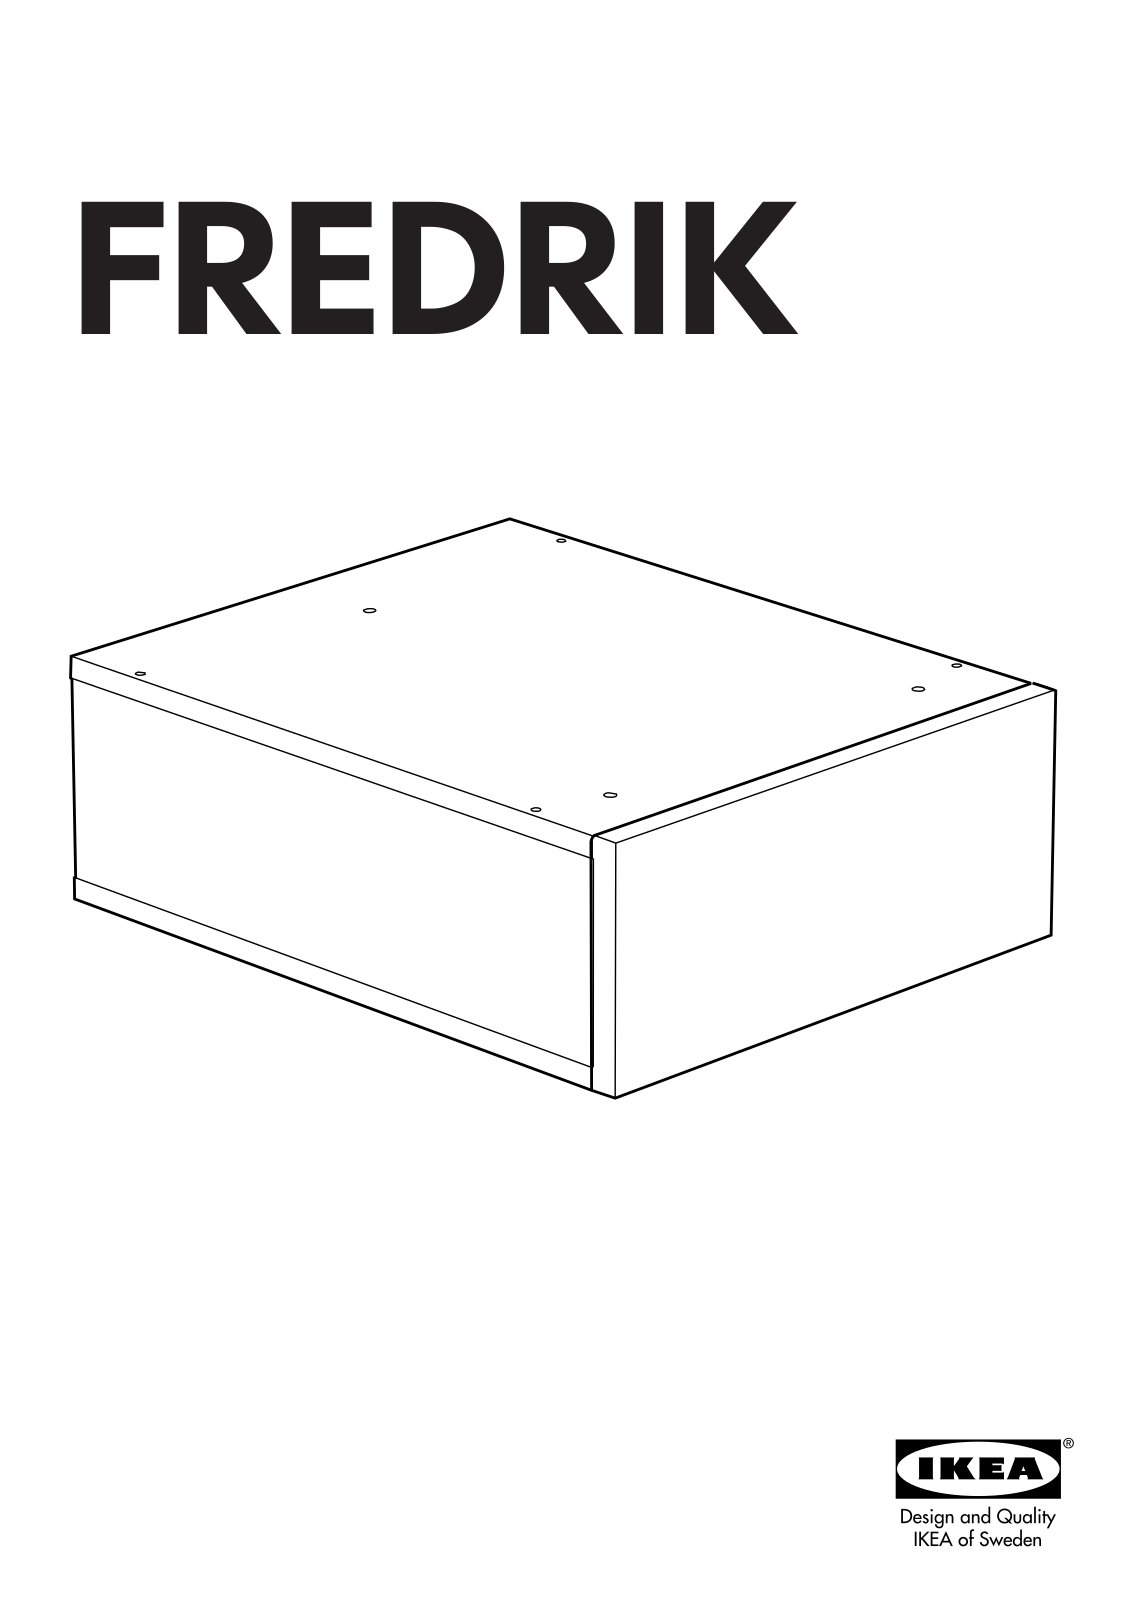 IKEA FREDRIK DRAWER SILVER User Manual